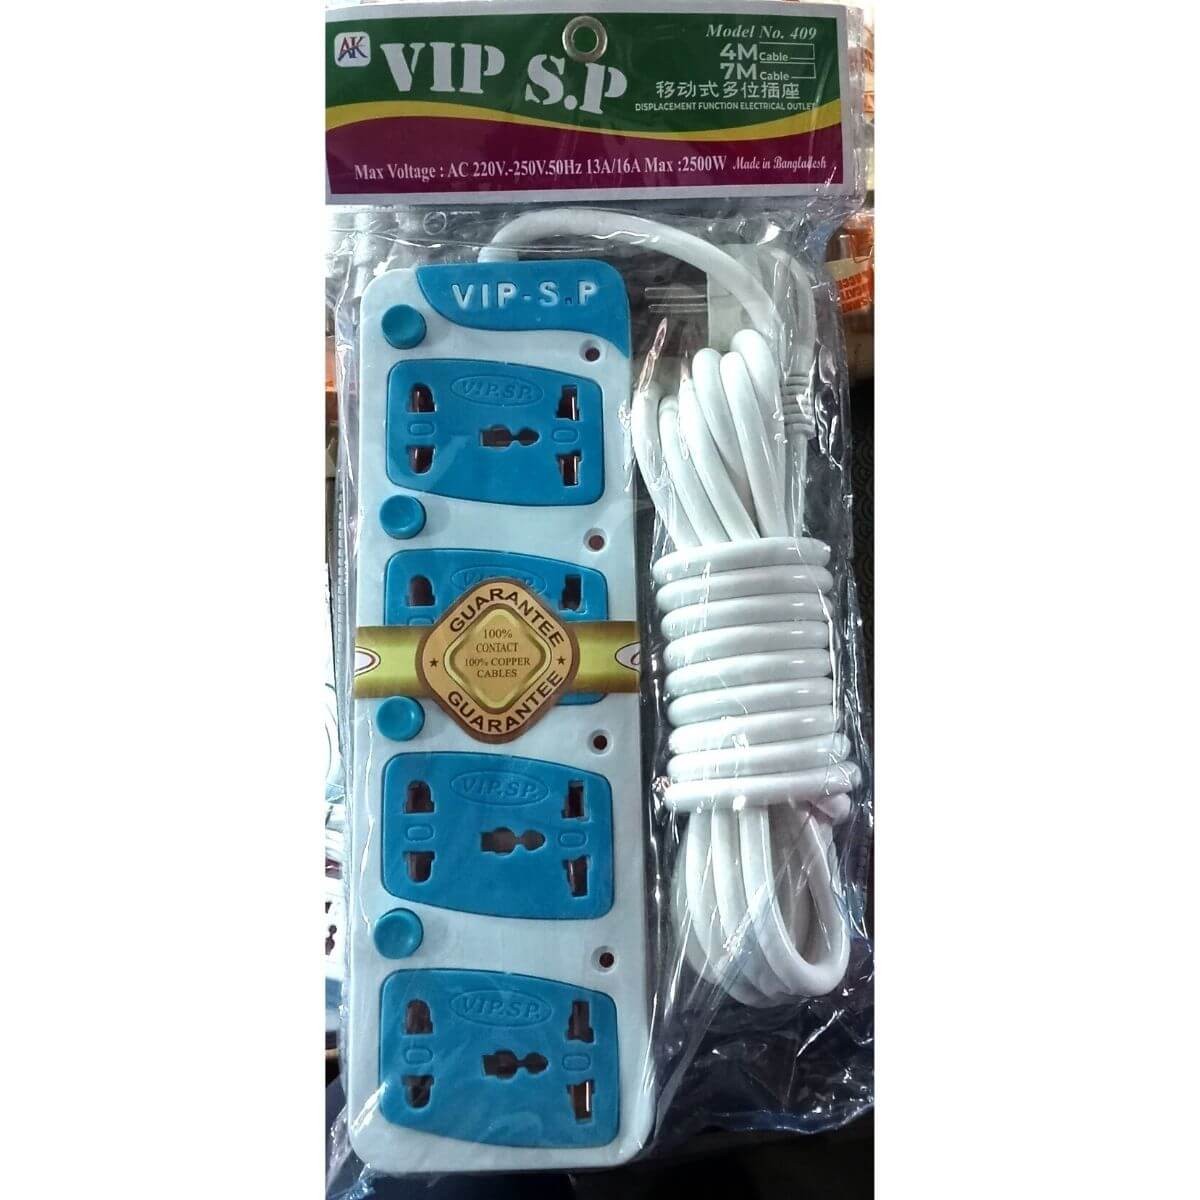 ViP Sp-409 7 Meter Cable Multiplug BD